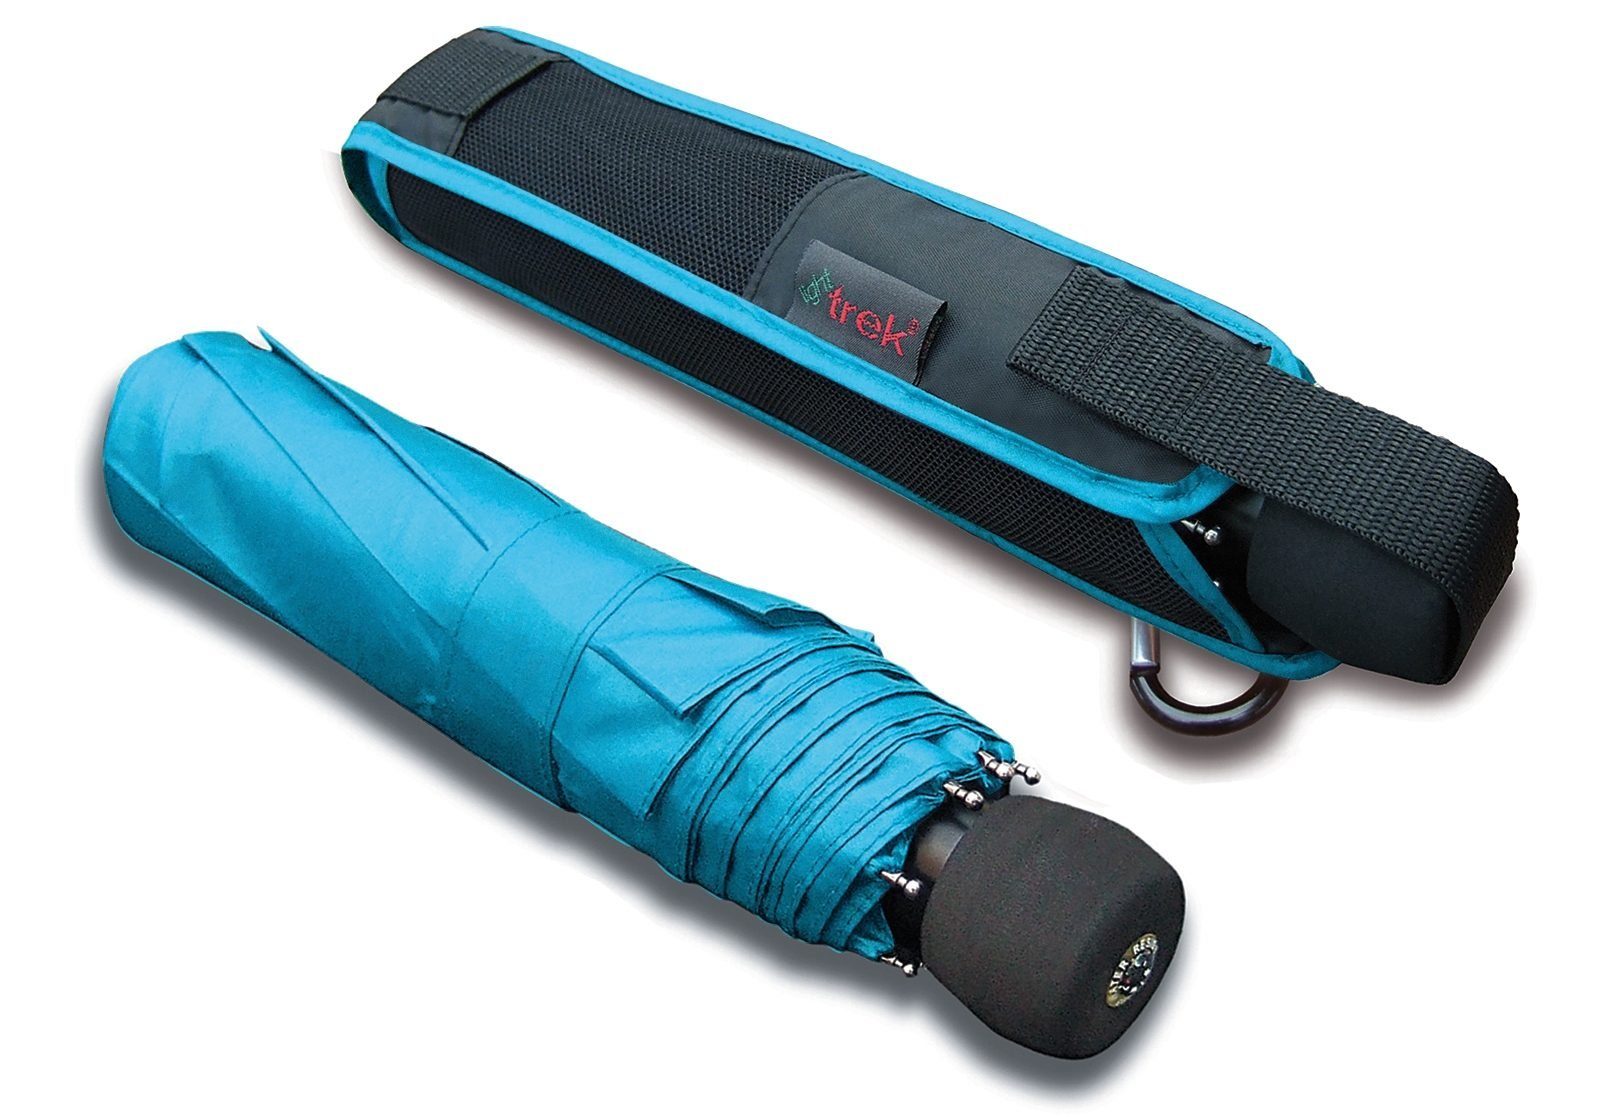 Taschenregenschirm EuroSCHIRM® Aluminium-Profil-Schaft trek, Kompass, mit gehärtetem light Mit integriertem